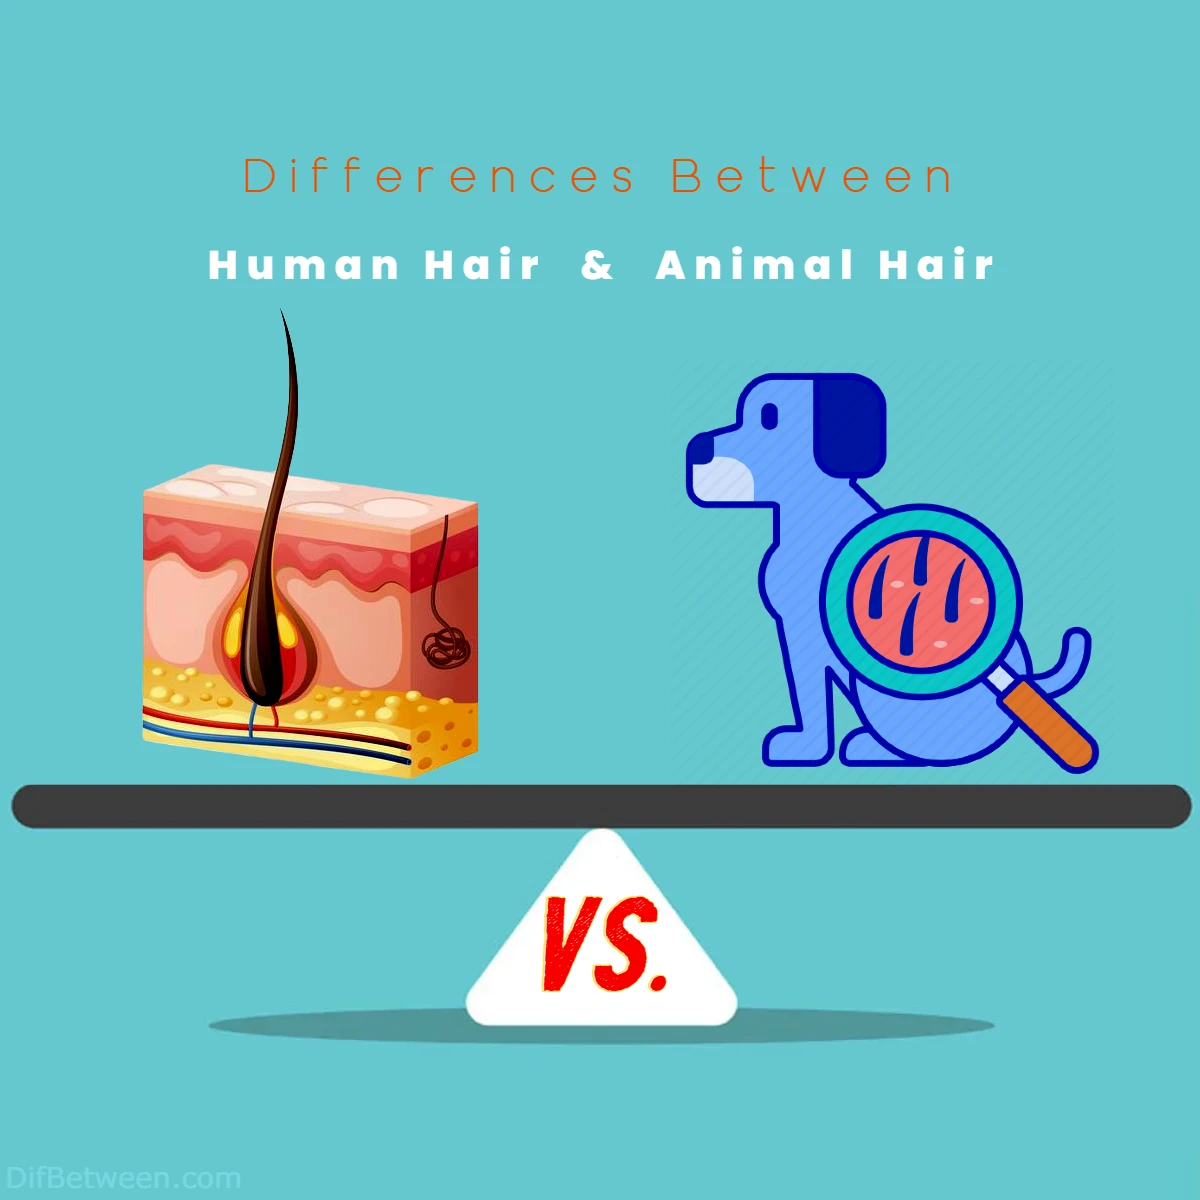 Differences Between Human vs Animal Hair